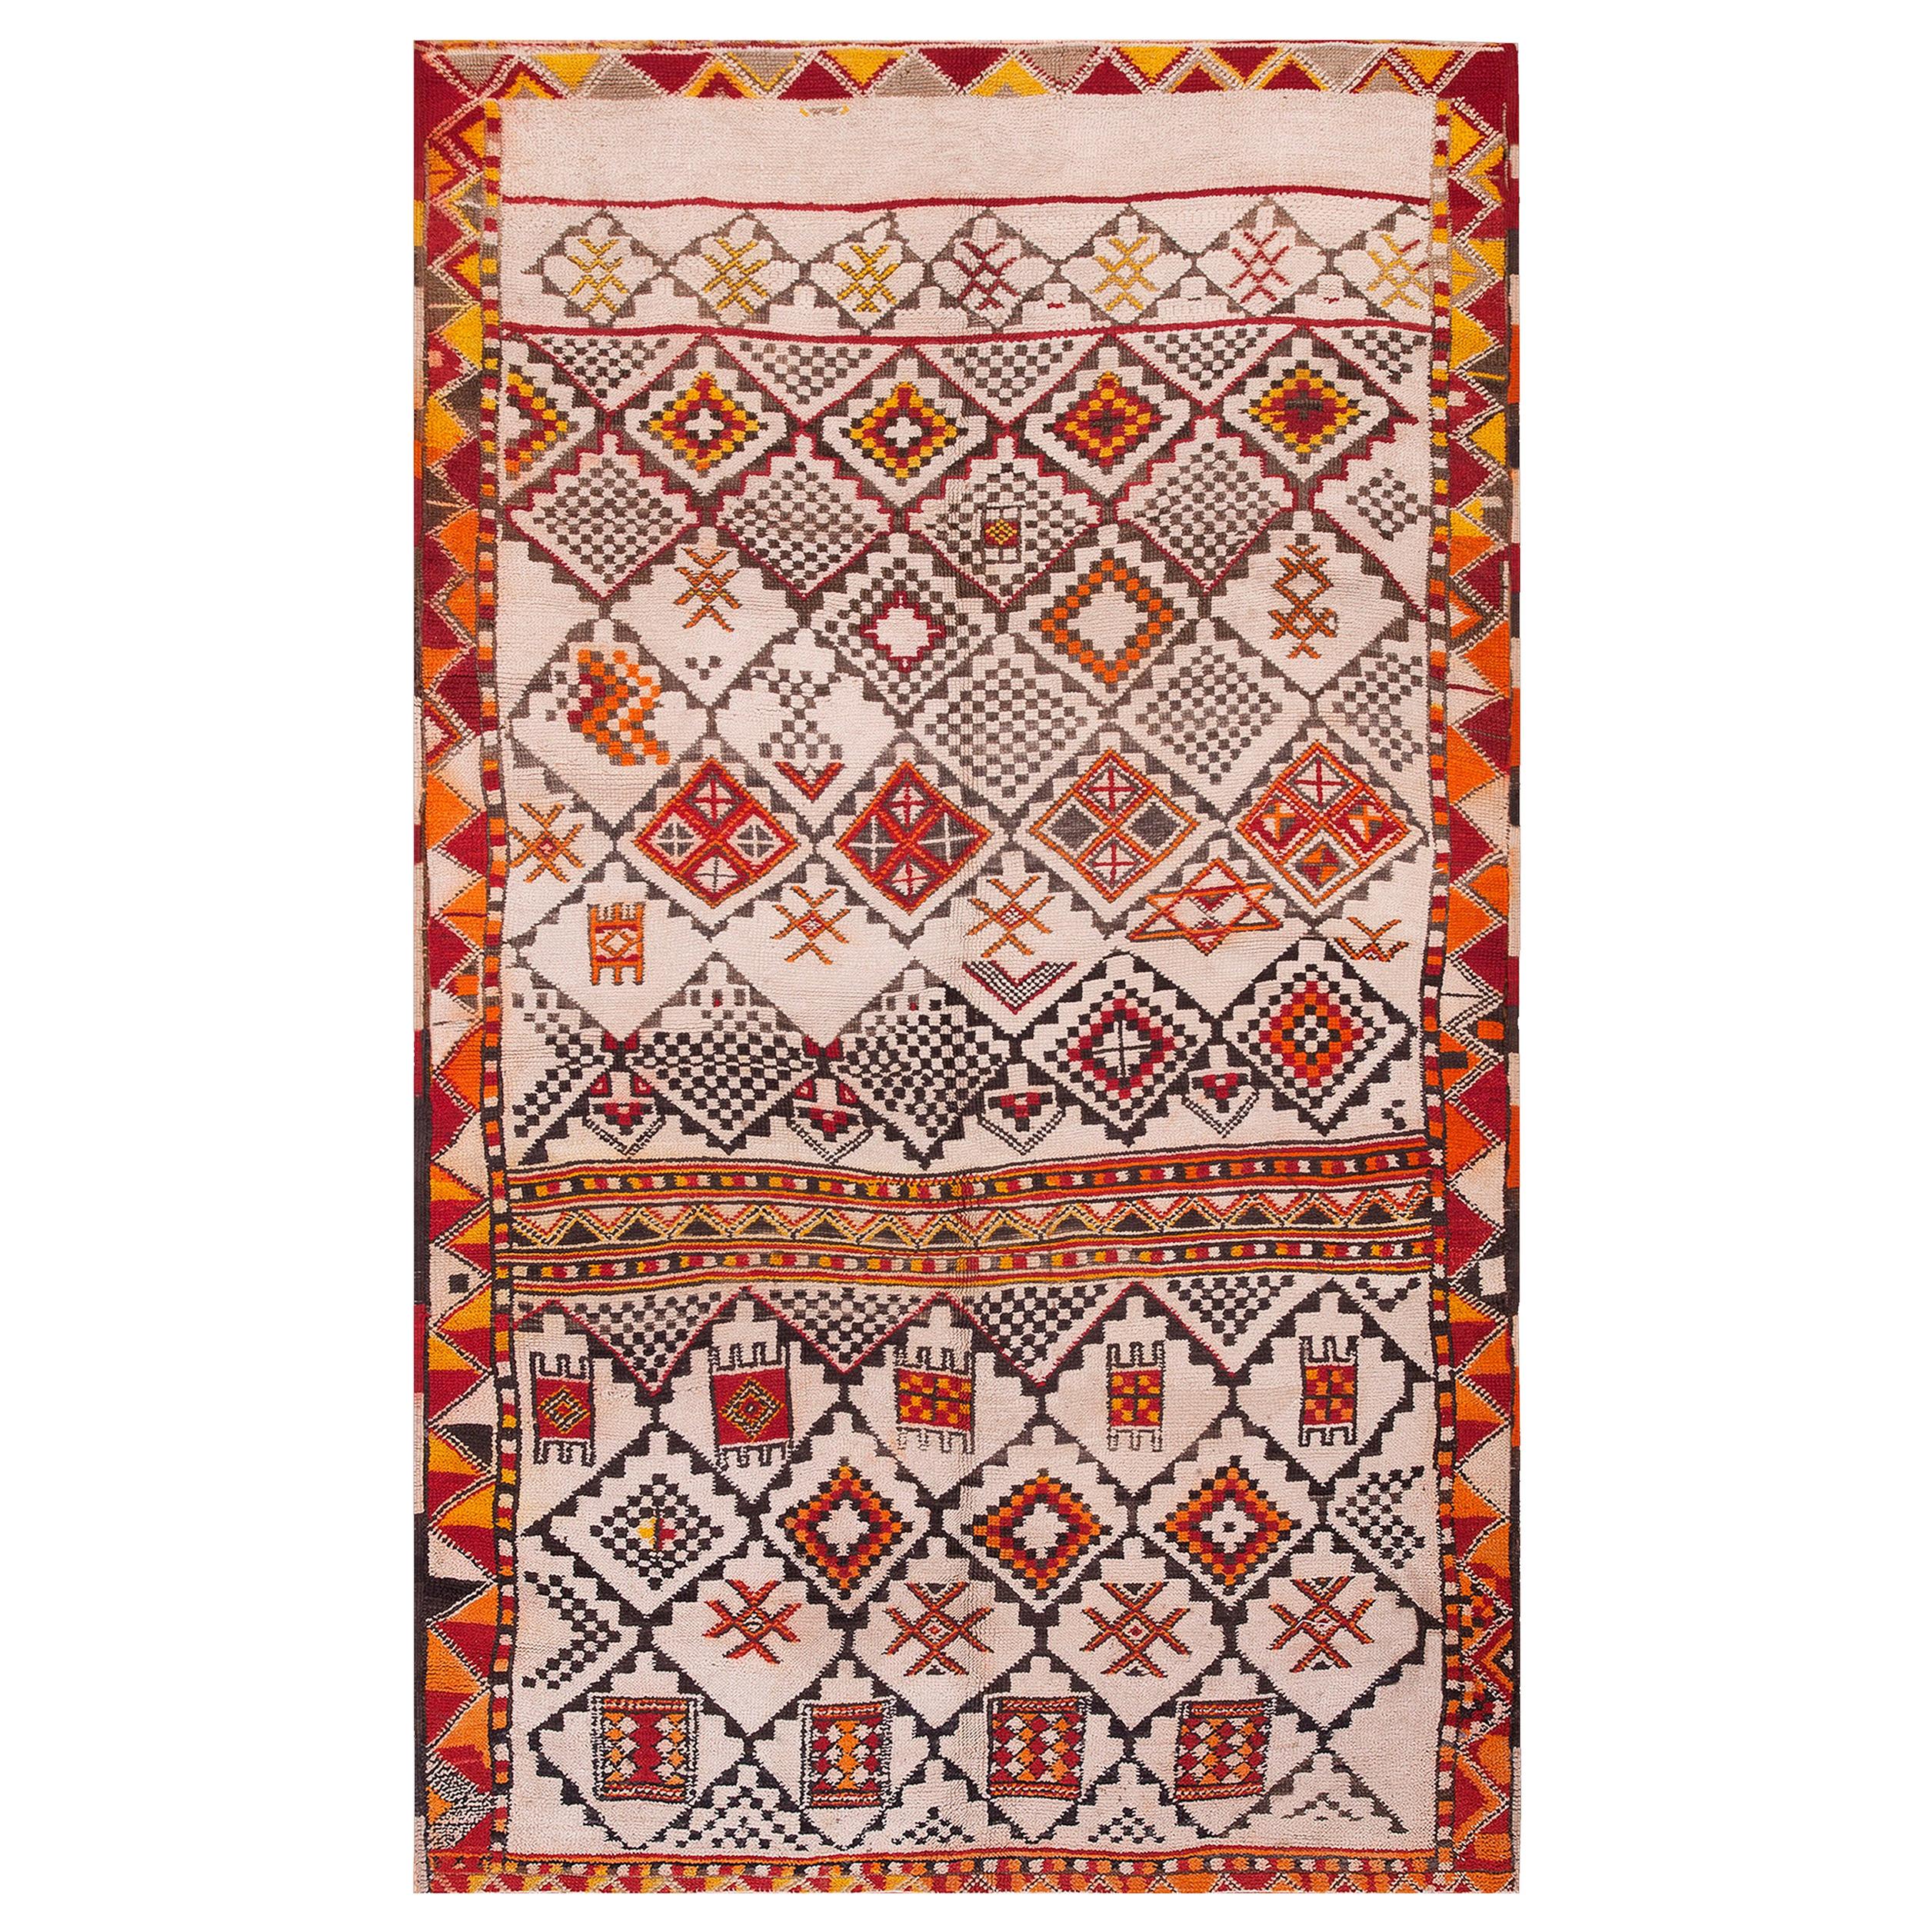 Antiker afrikanischer marokkanischer antiker Teppich